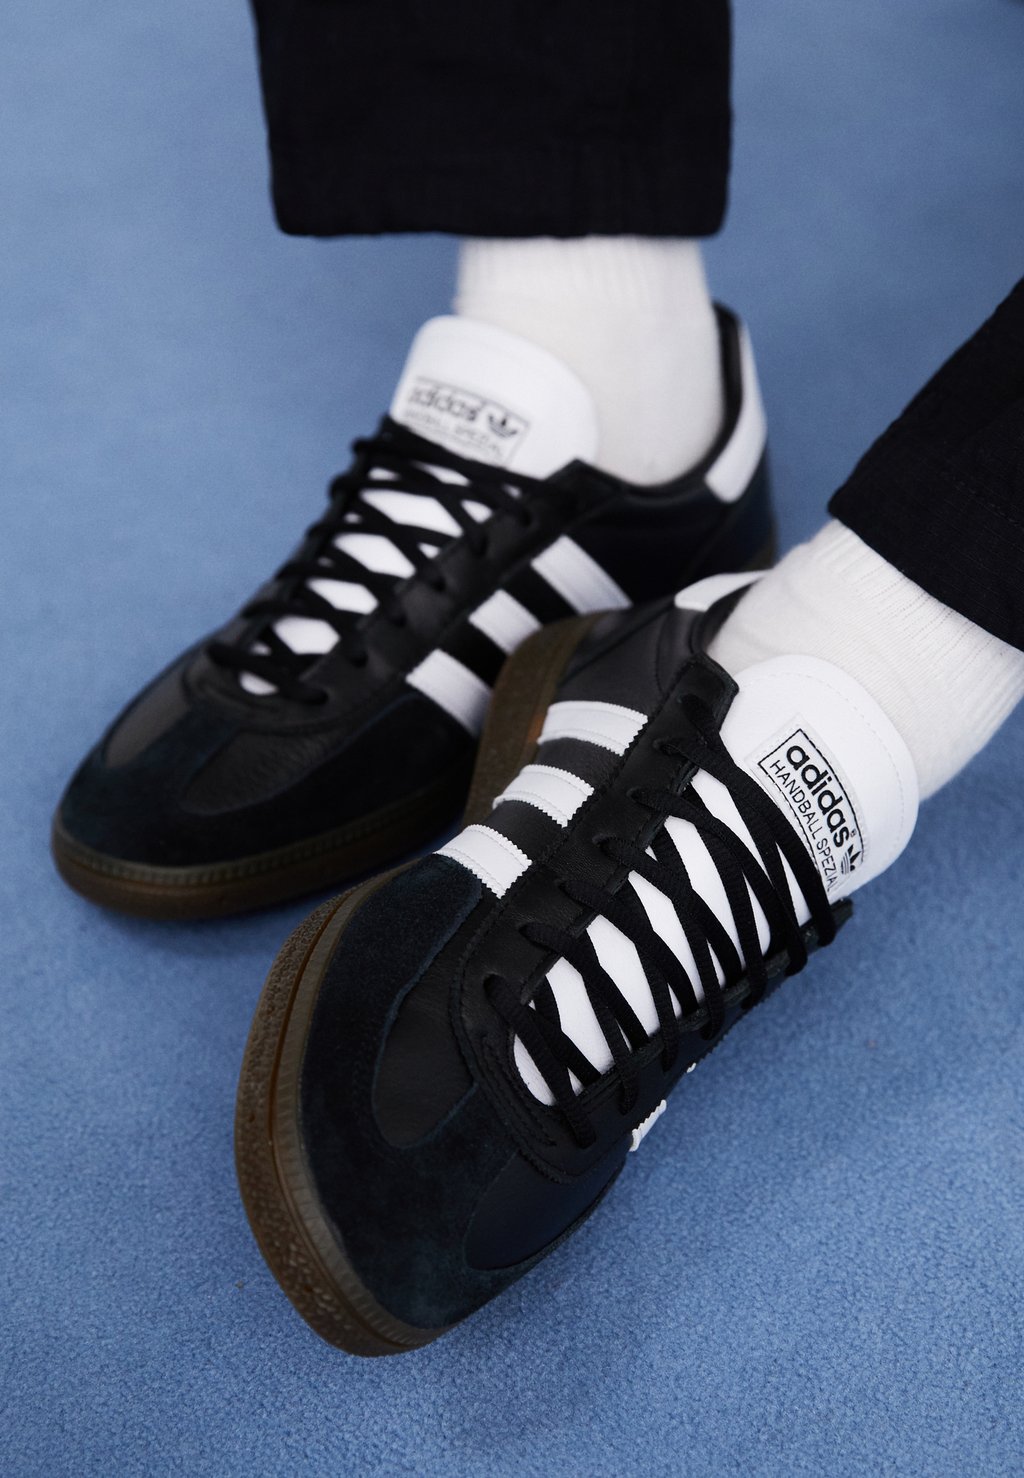 Низкие кроссовки Handball Spezial Unisex adidas Originals, цвет core black/footwear white низкие кроссовки ozweego tech unisex adidas originals цвет footwear white